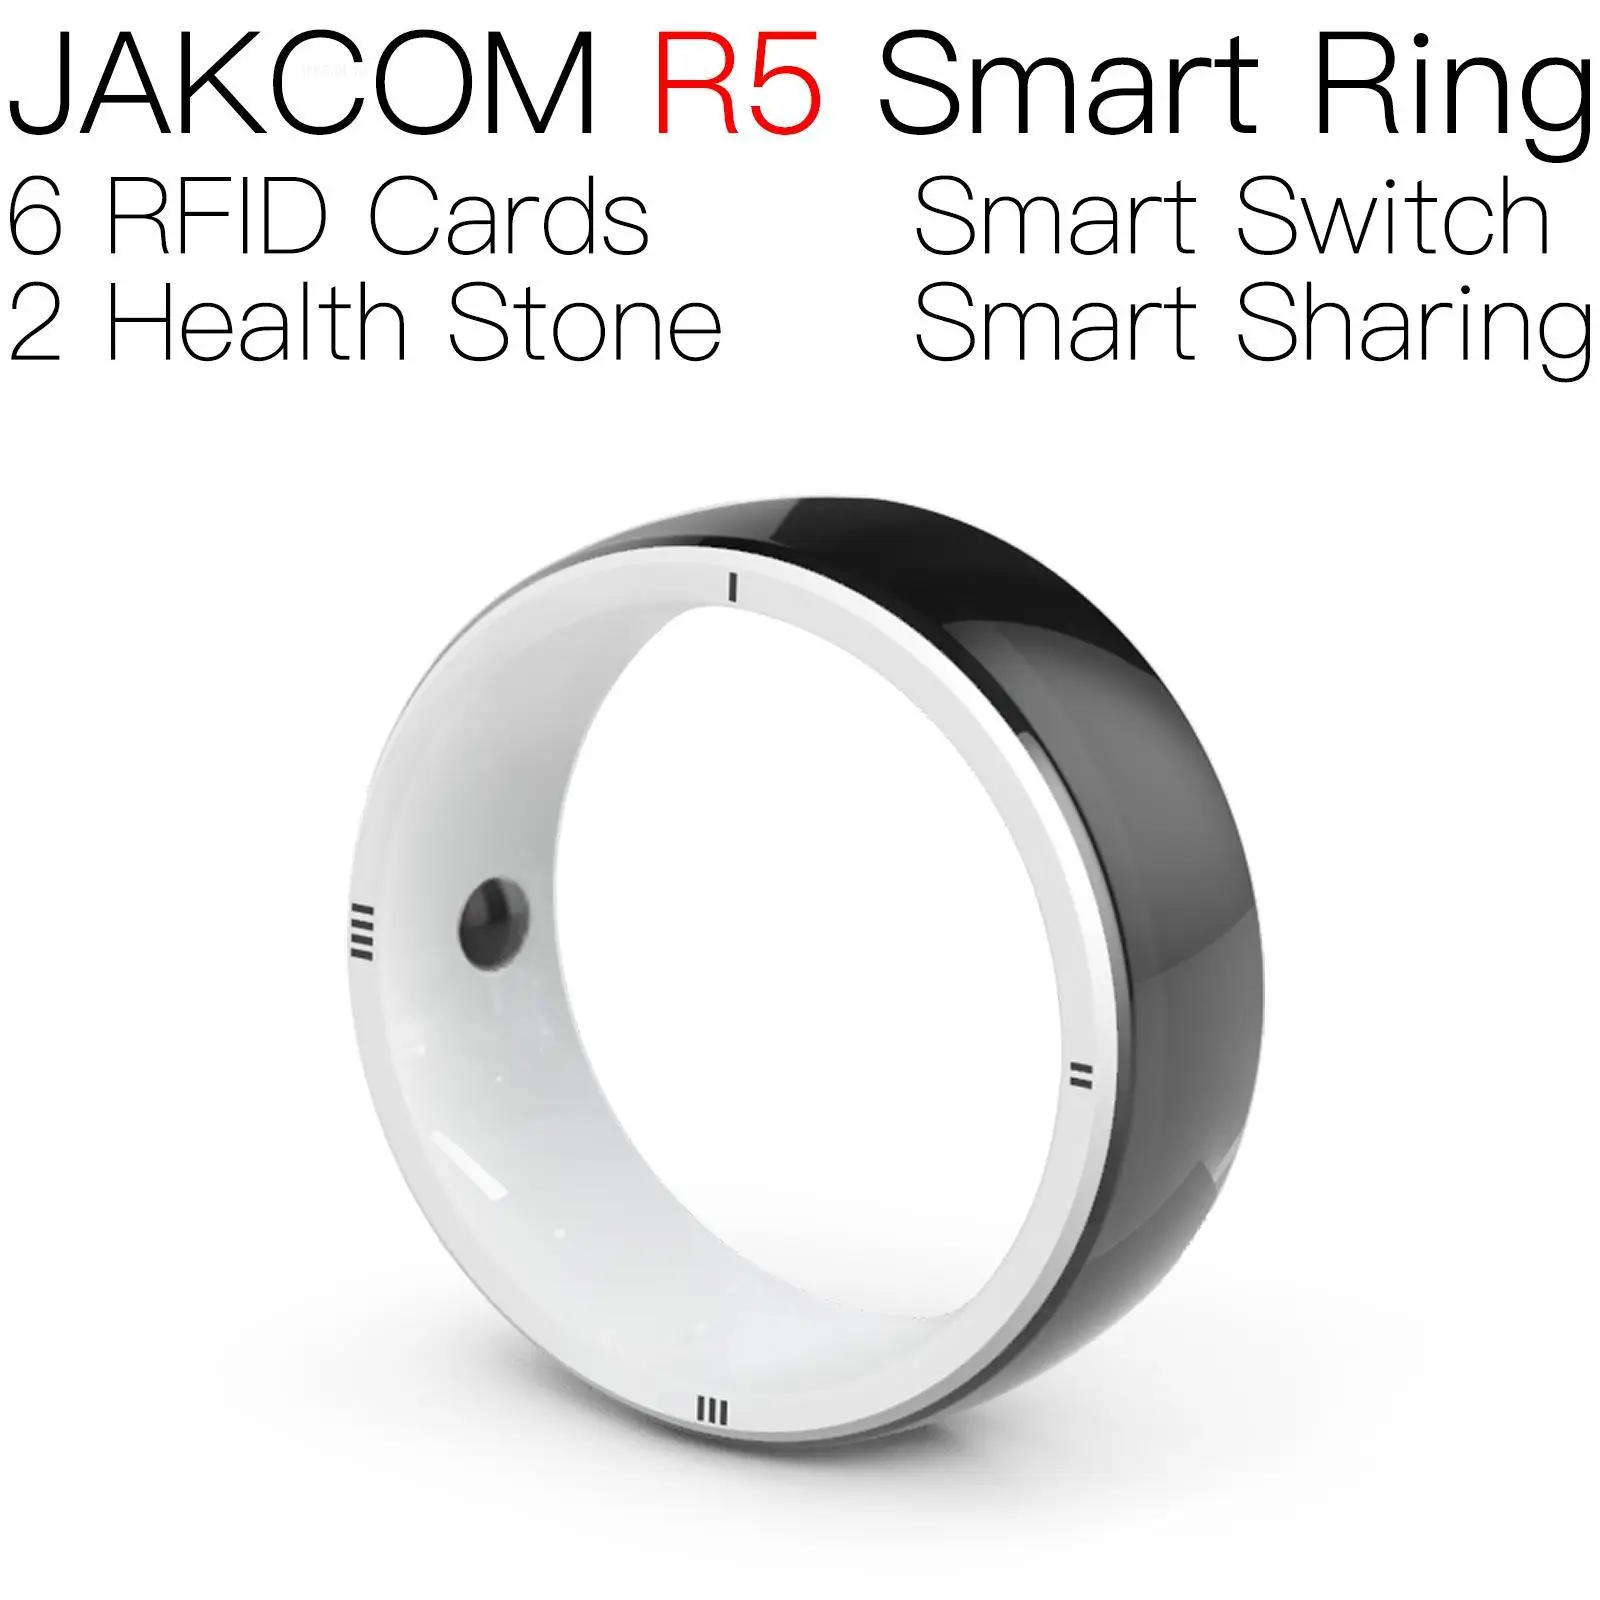 

JAKCOM R5 Smart Ring For men women pataco s12 key chip rfid human tracking chips fancy windshield sauna 125khz card 10000pcs